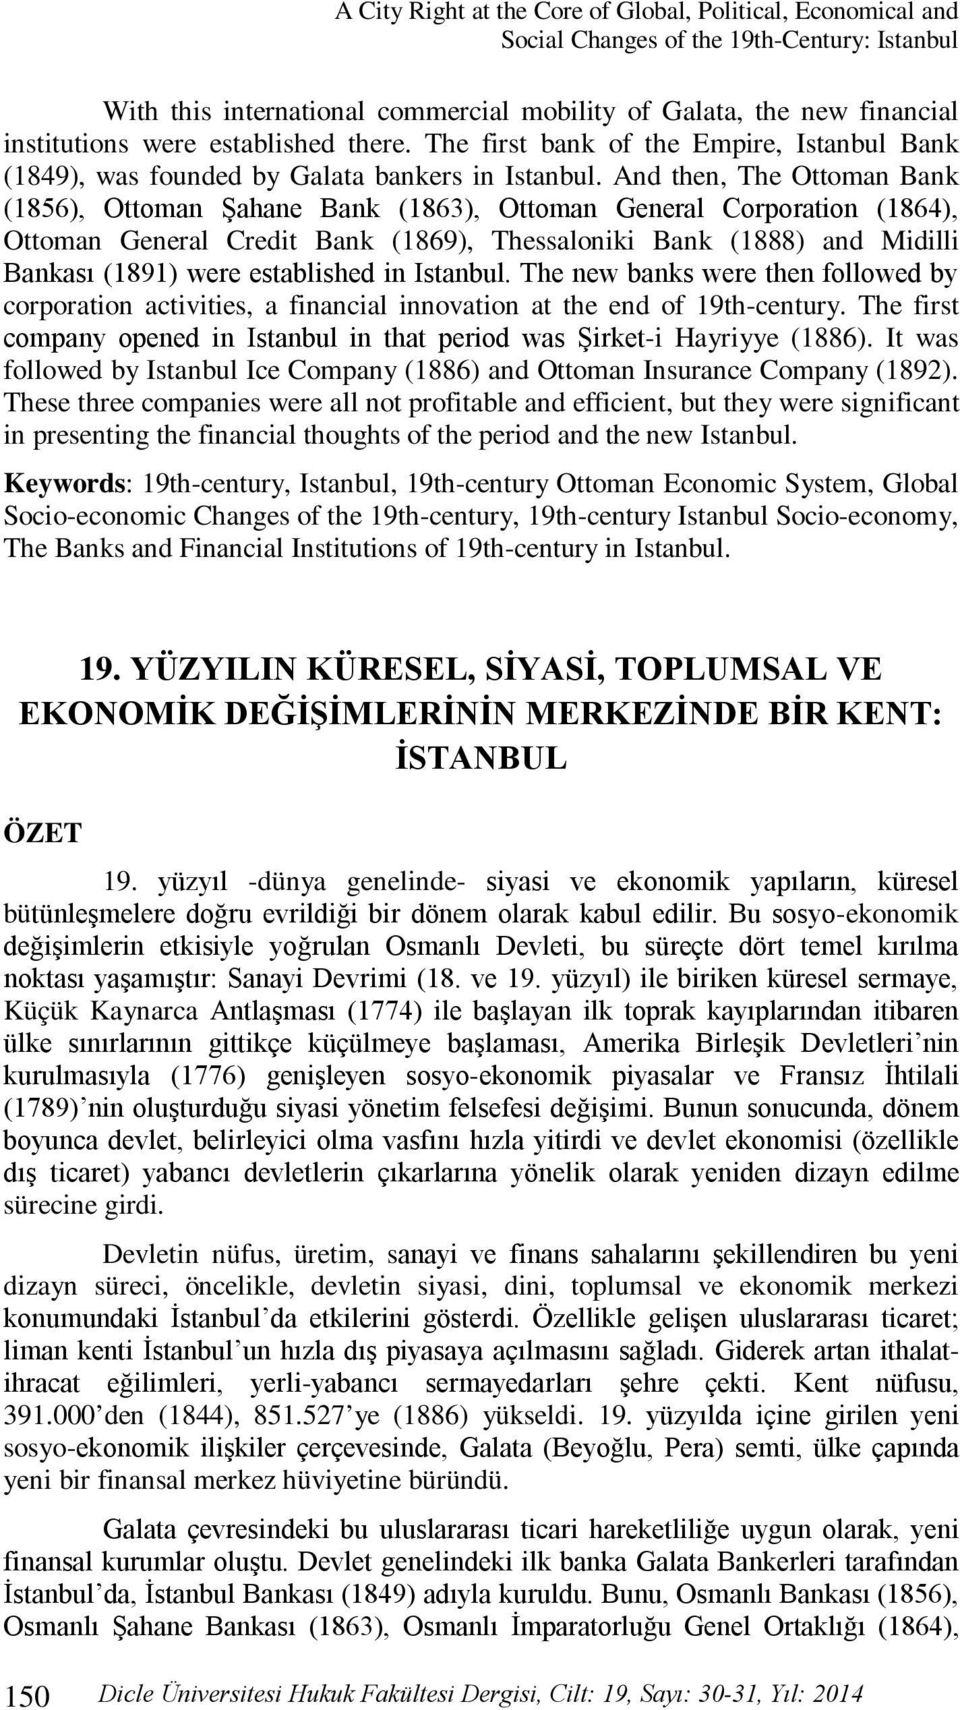 And then, The Ottoman Bank (1856), Ottoman Şahane Bank (1863), Ottoman General Corporation (1864), Ottoman General Credit Bank (1869), Thessaloniki Bank (1888) and Midilli Bankası (1891) were